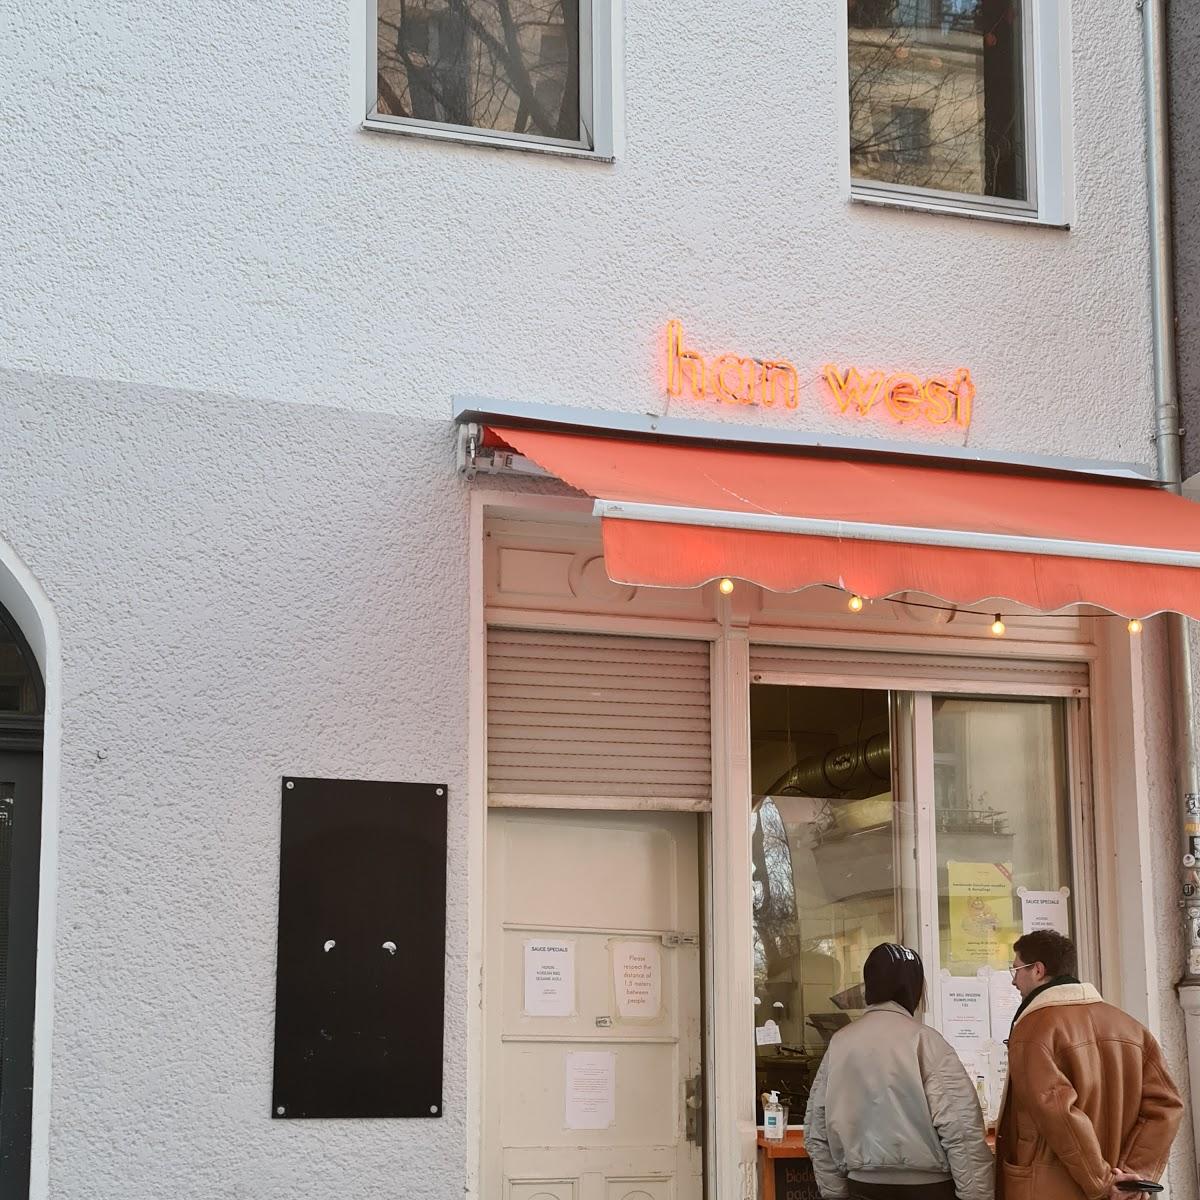 Restaurant "han west - home of dumplings" in  Berlin